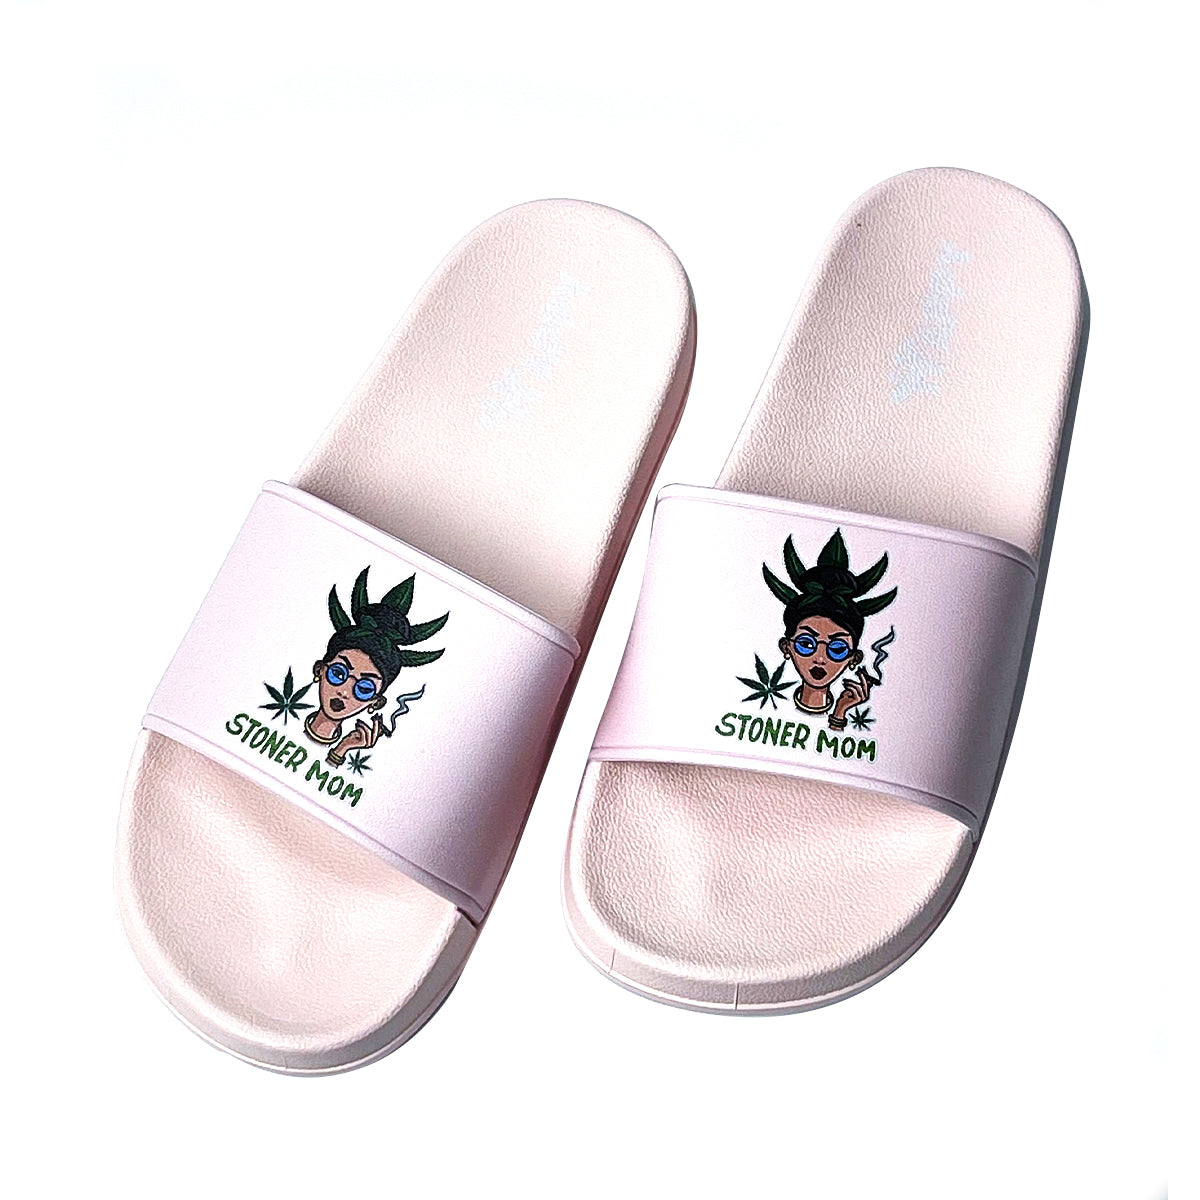 Stoner Mom Print Pink Slide Sandals - Pack of 4 Sizes - 7, 9, 11, 12